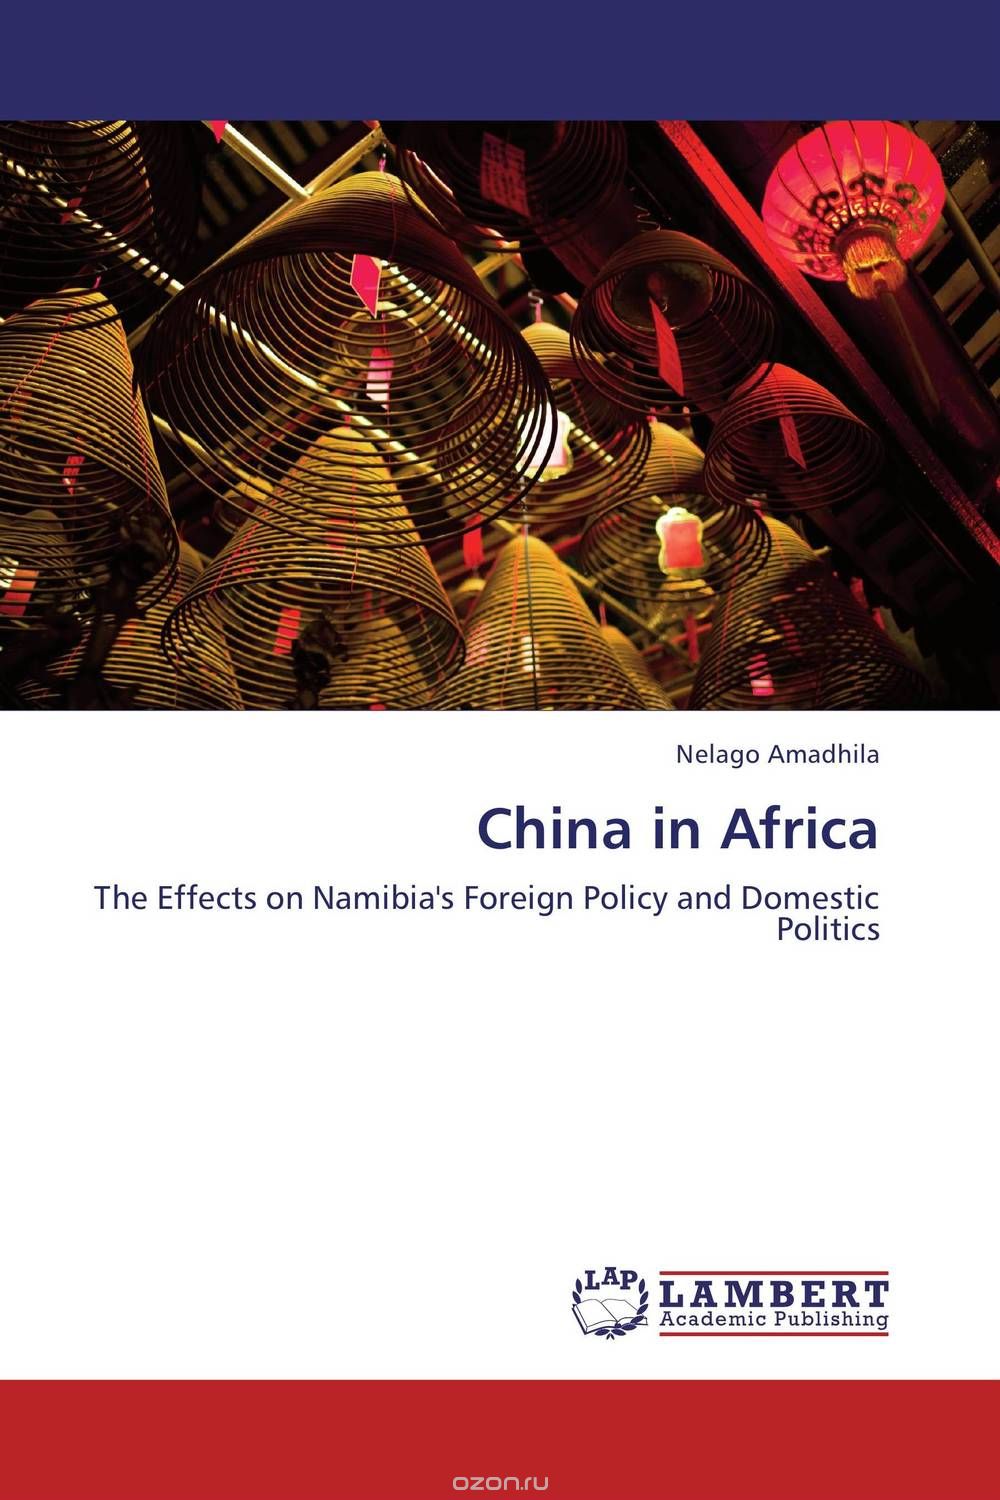 Скачать книгу "China in Africa"